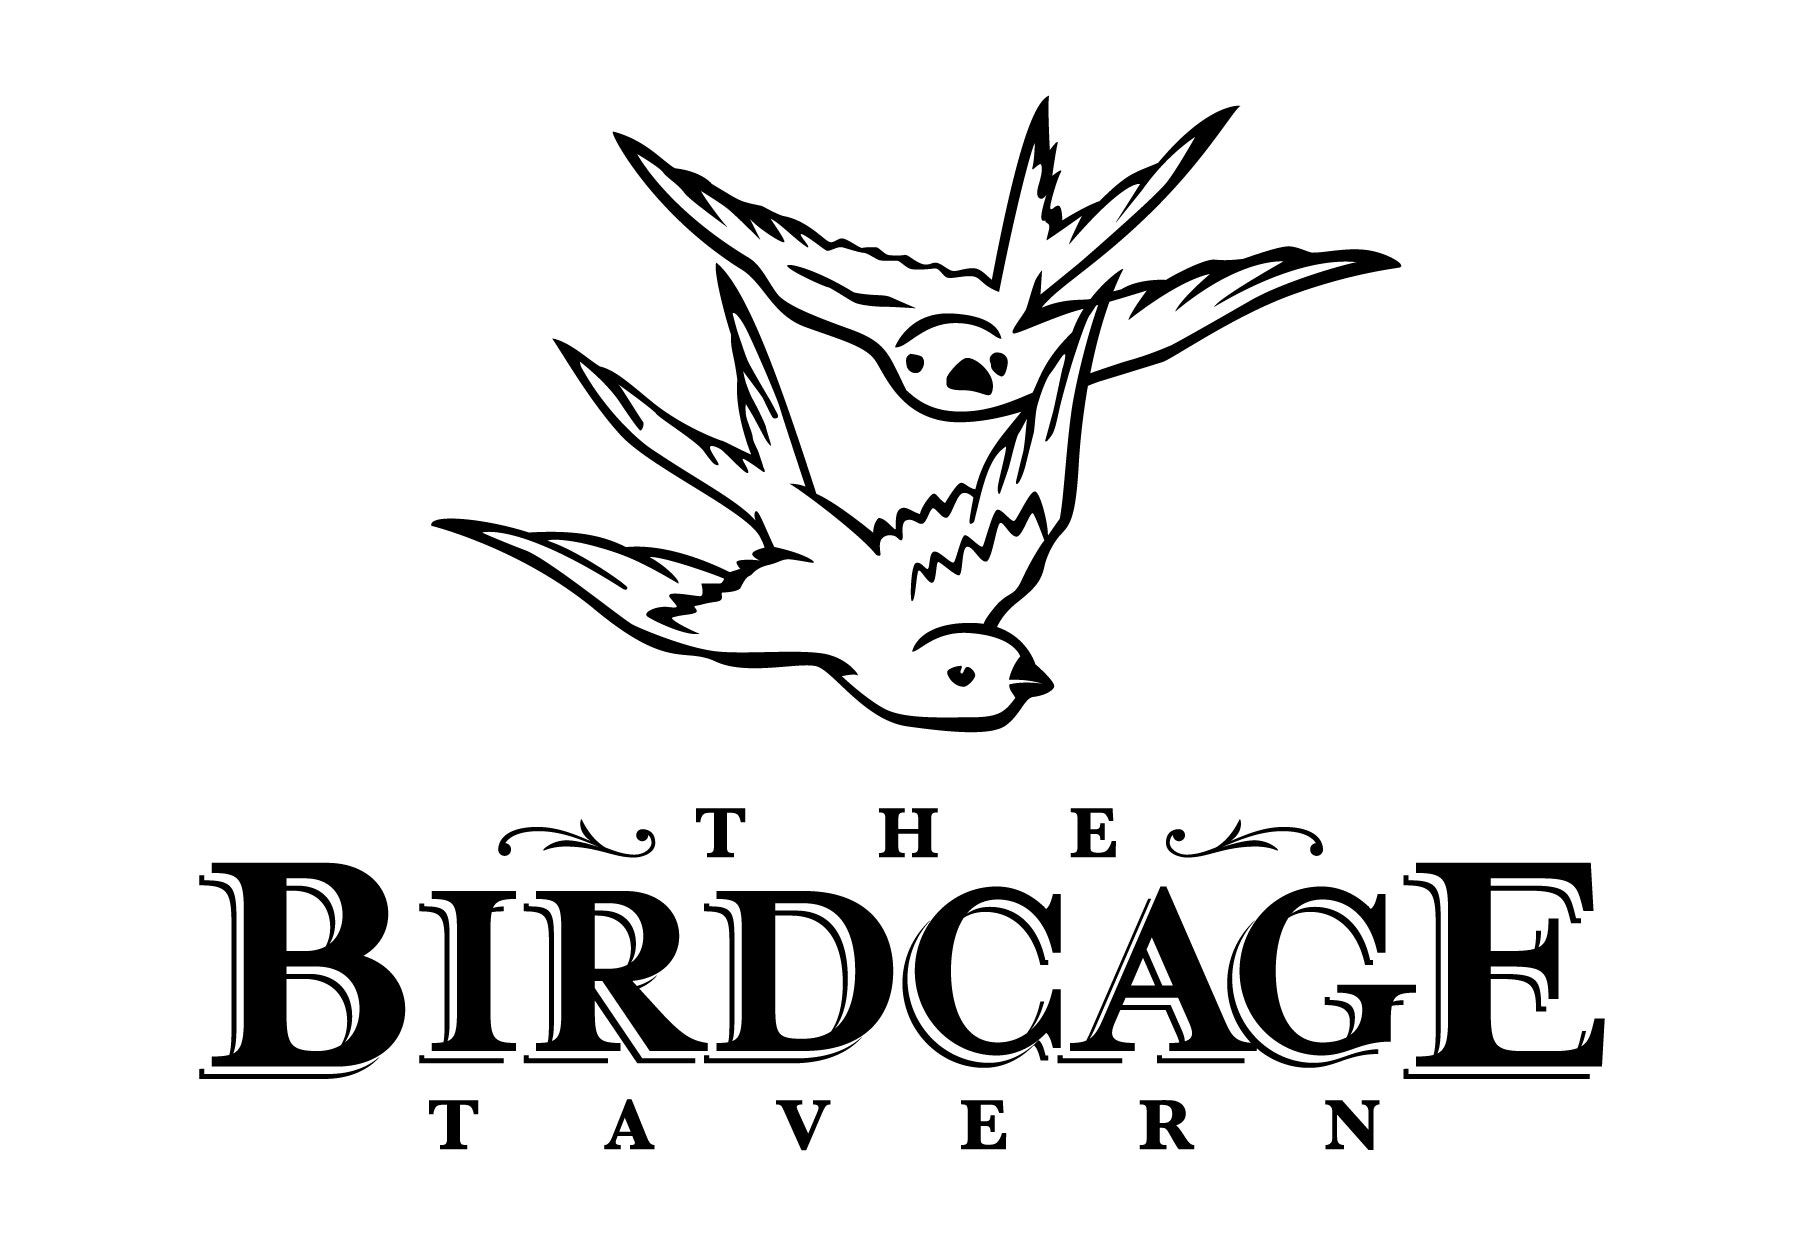 The_Birdcage_Tavern-Logo_1.jpg